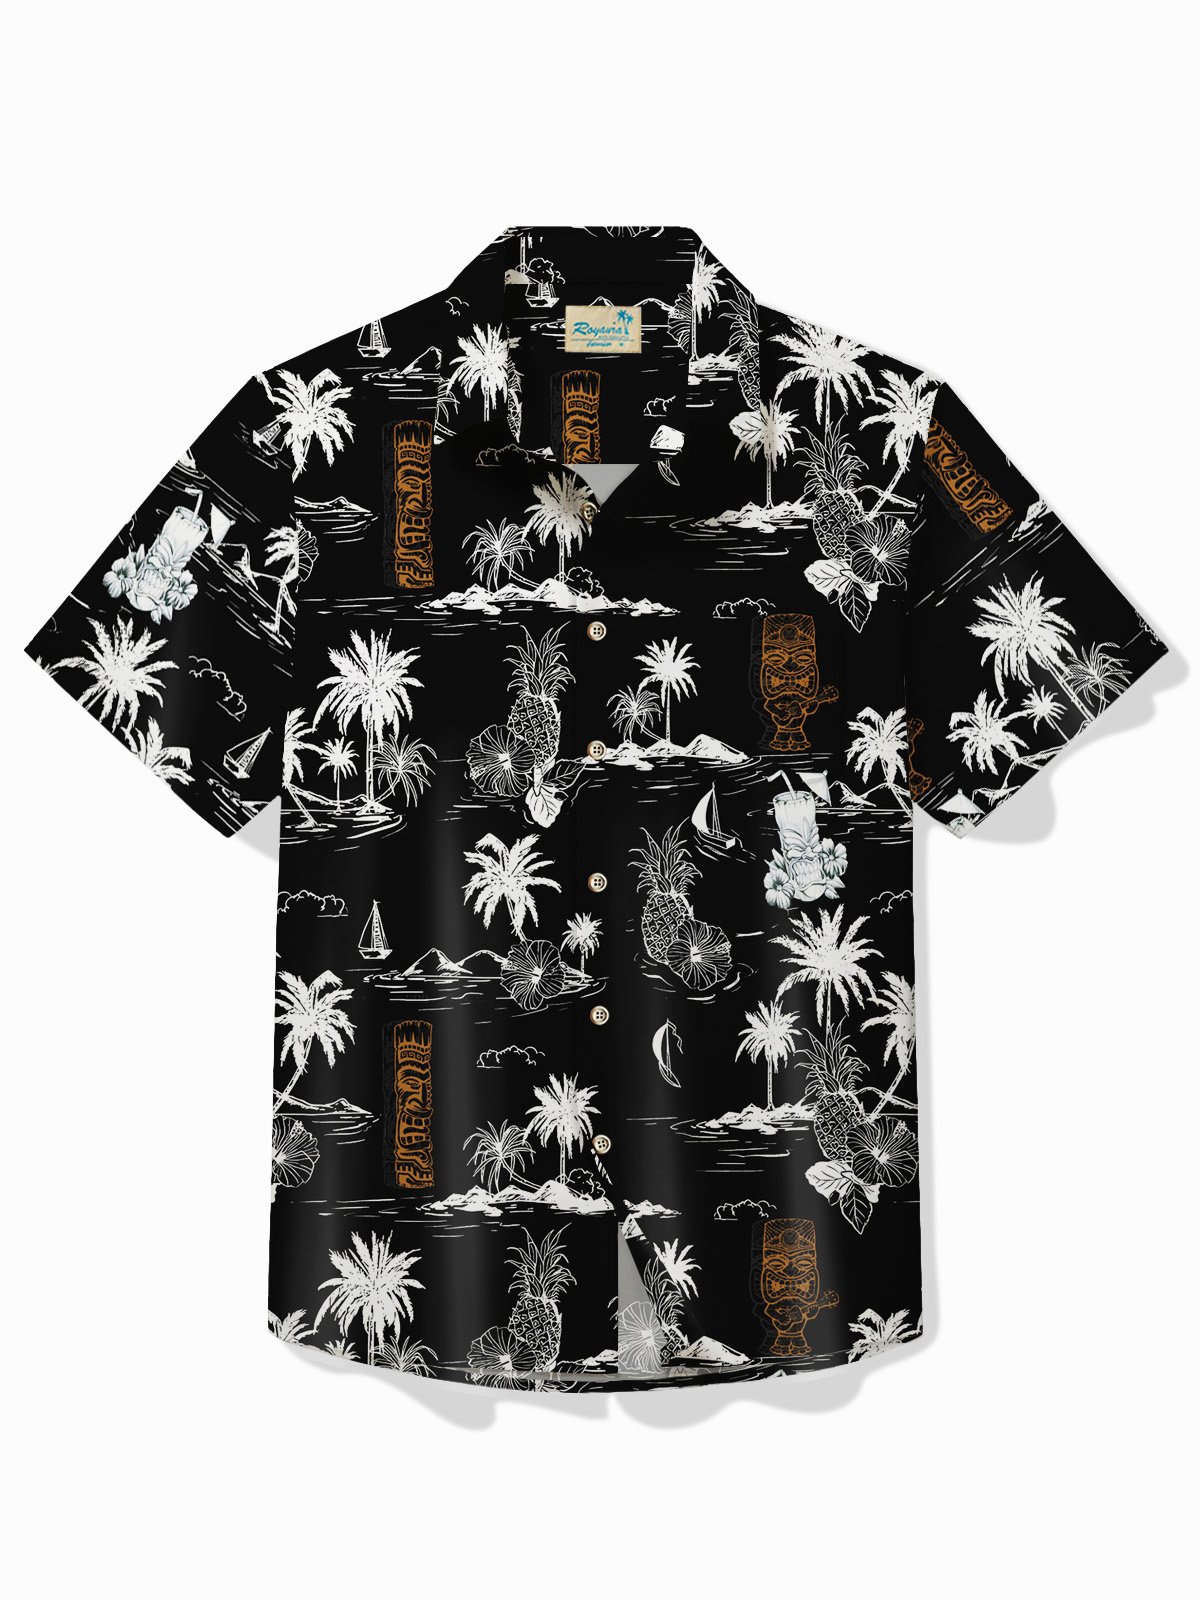 Royaura® Beach Holiday Black Men's Hawaiian Shirt TIKI Coconut Tree Camp Pocket Band Artist Shirt Big Tall